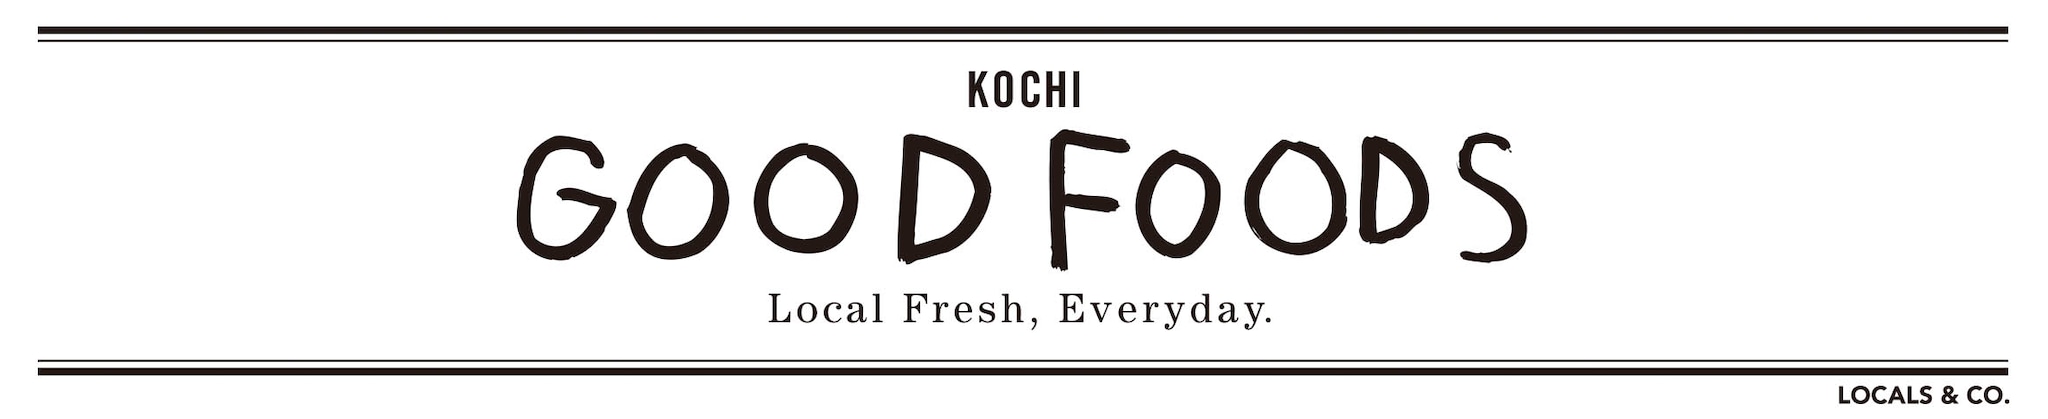 KOCHI GOOD FOODS